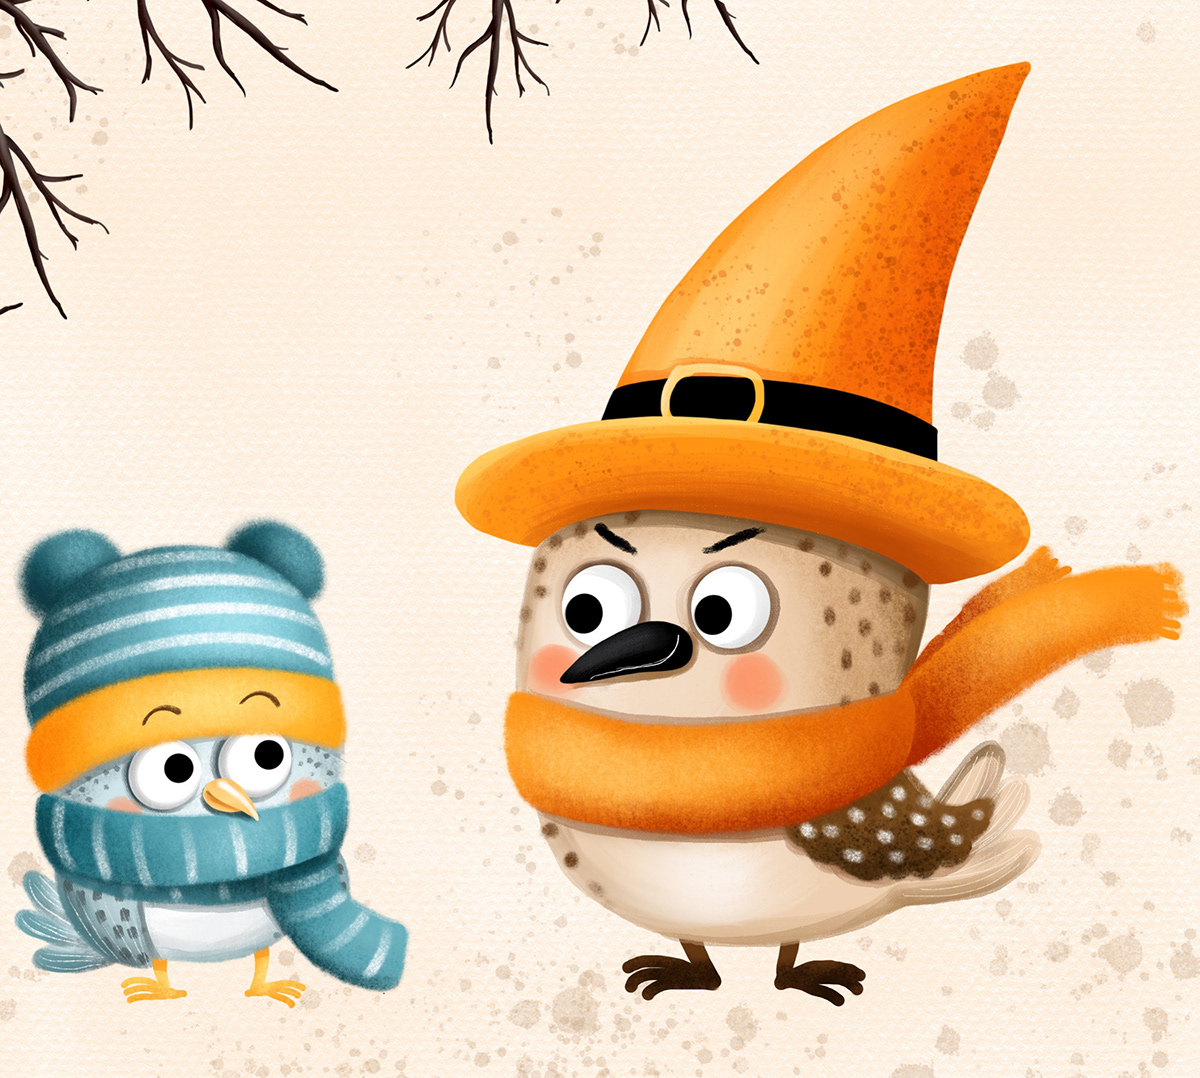 autumn Character design  children illustration cute ghost Halloween pumpkin witch stickers